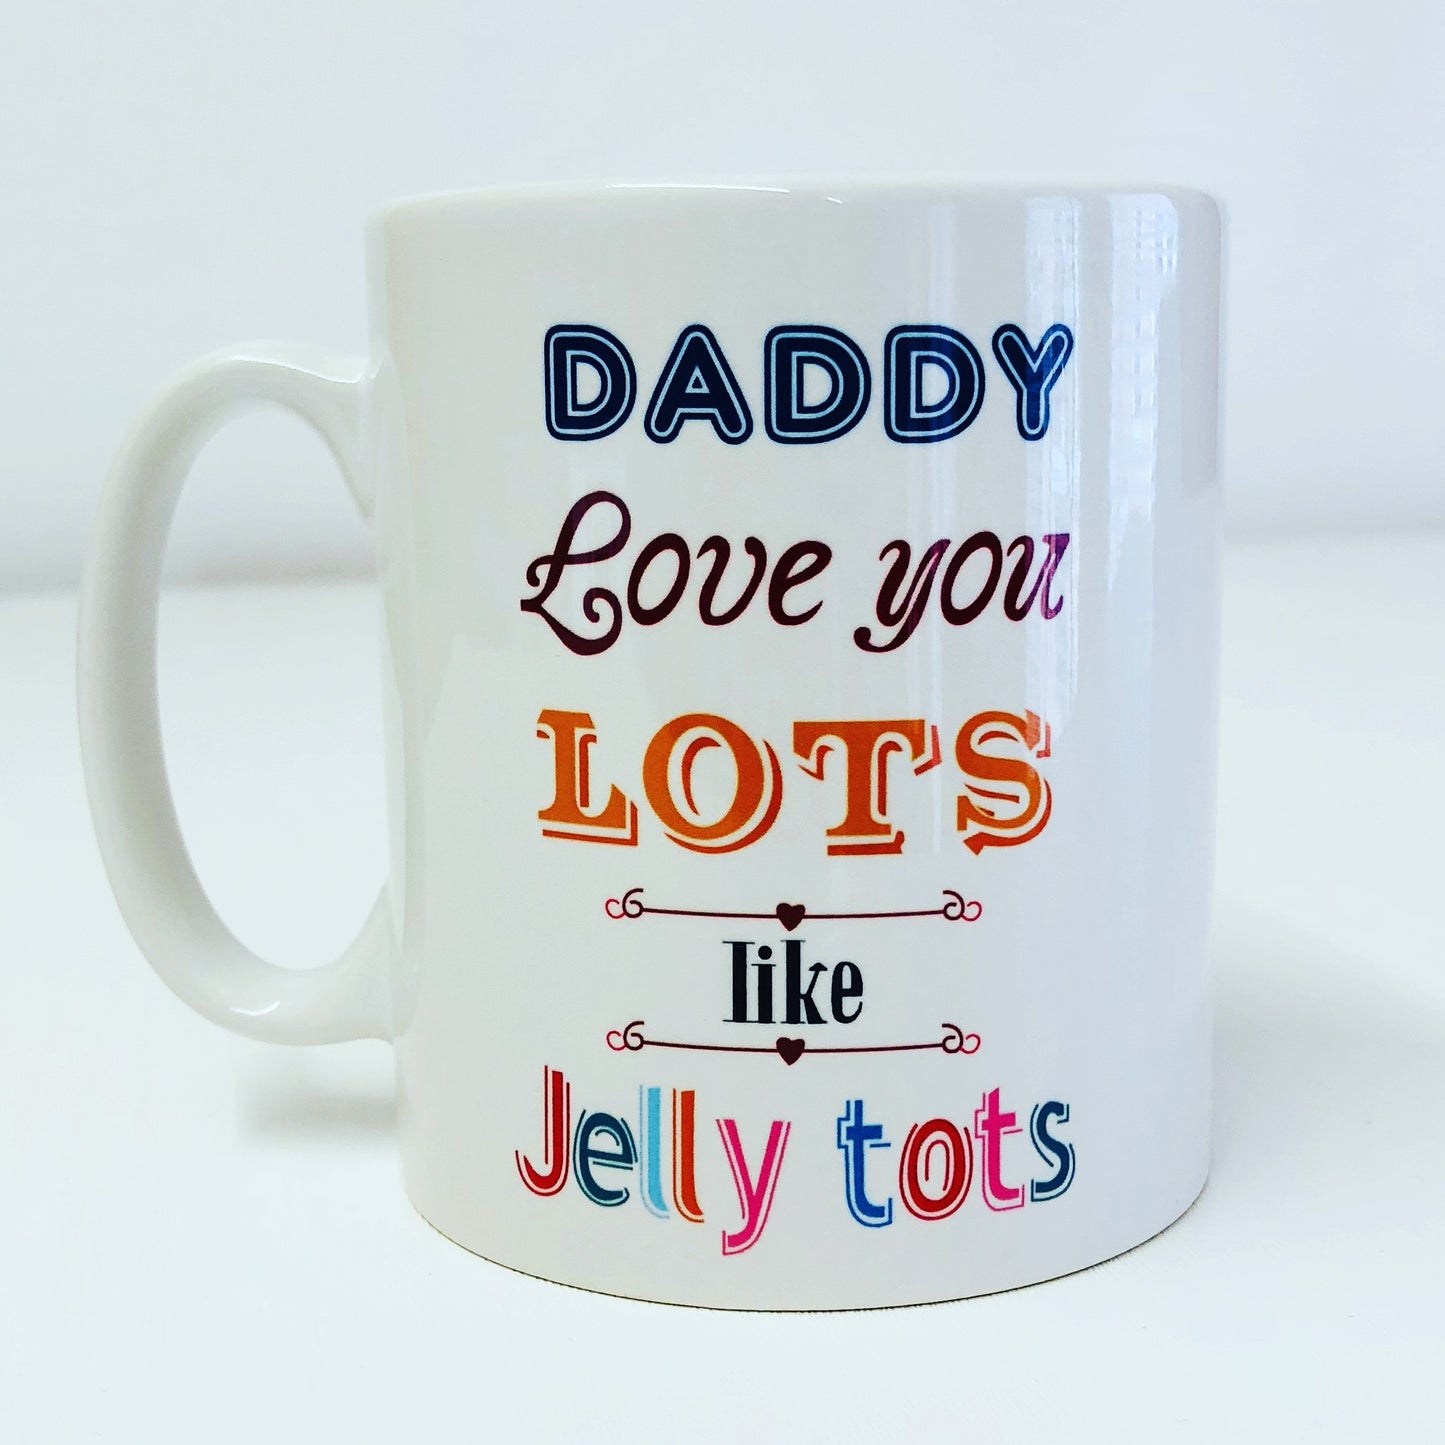 Personalised Love you lots like Jelly Tots Mug